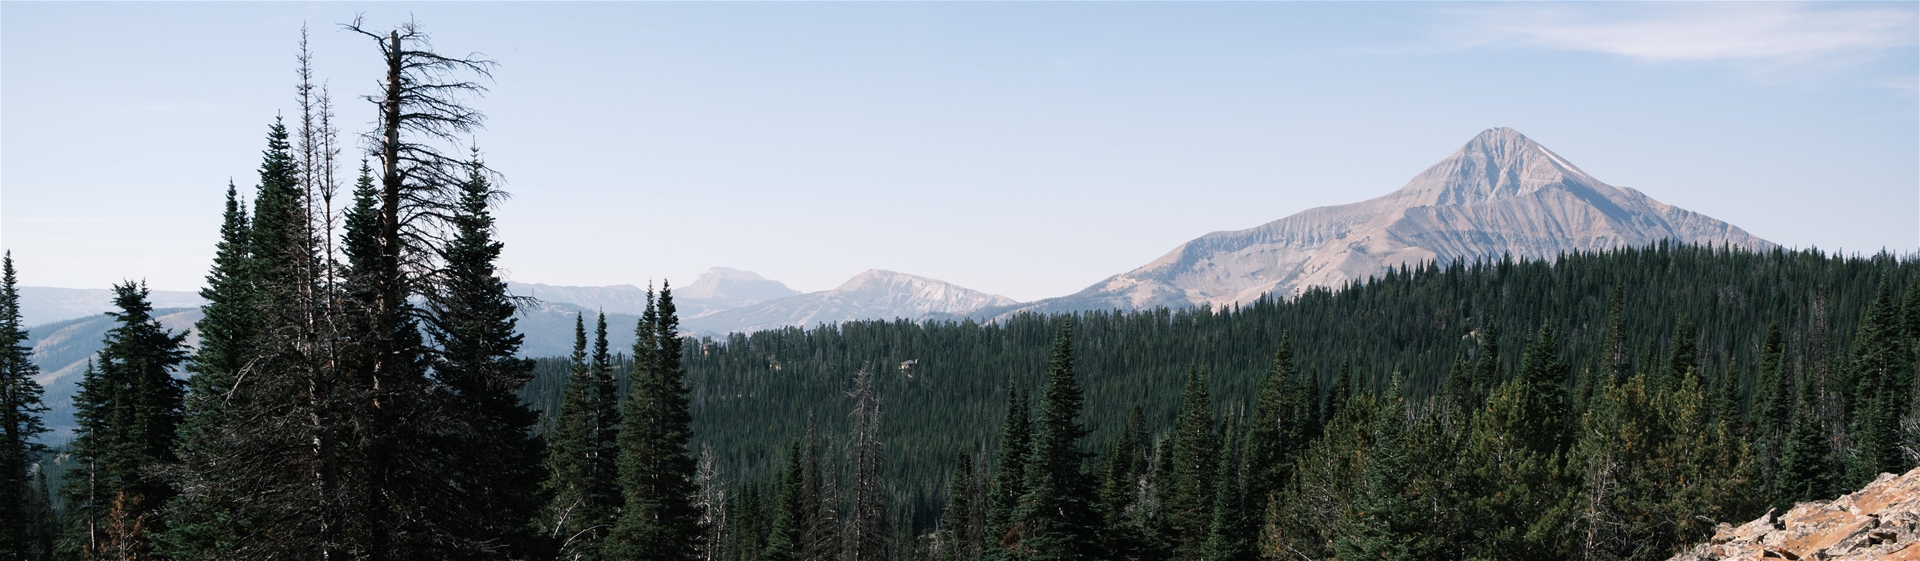 Lone Peak and the Montana Big Sky